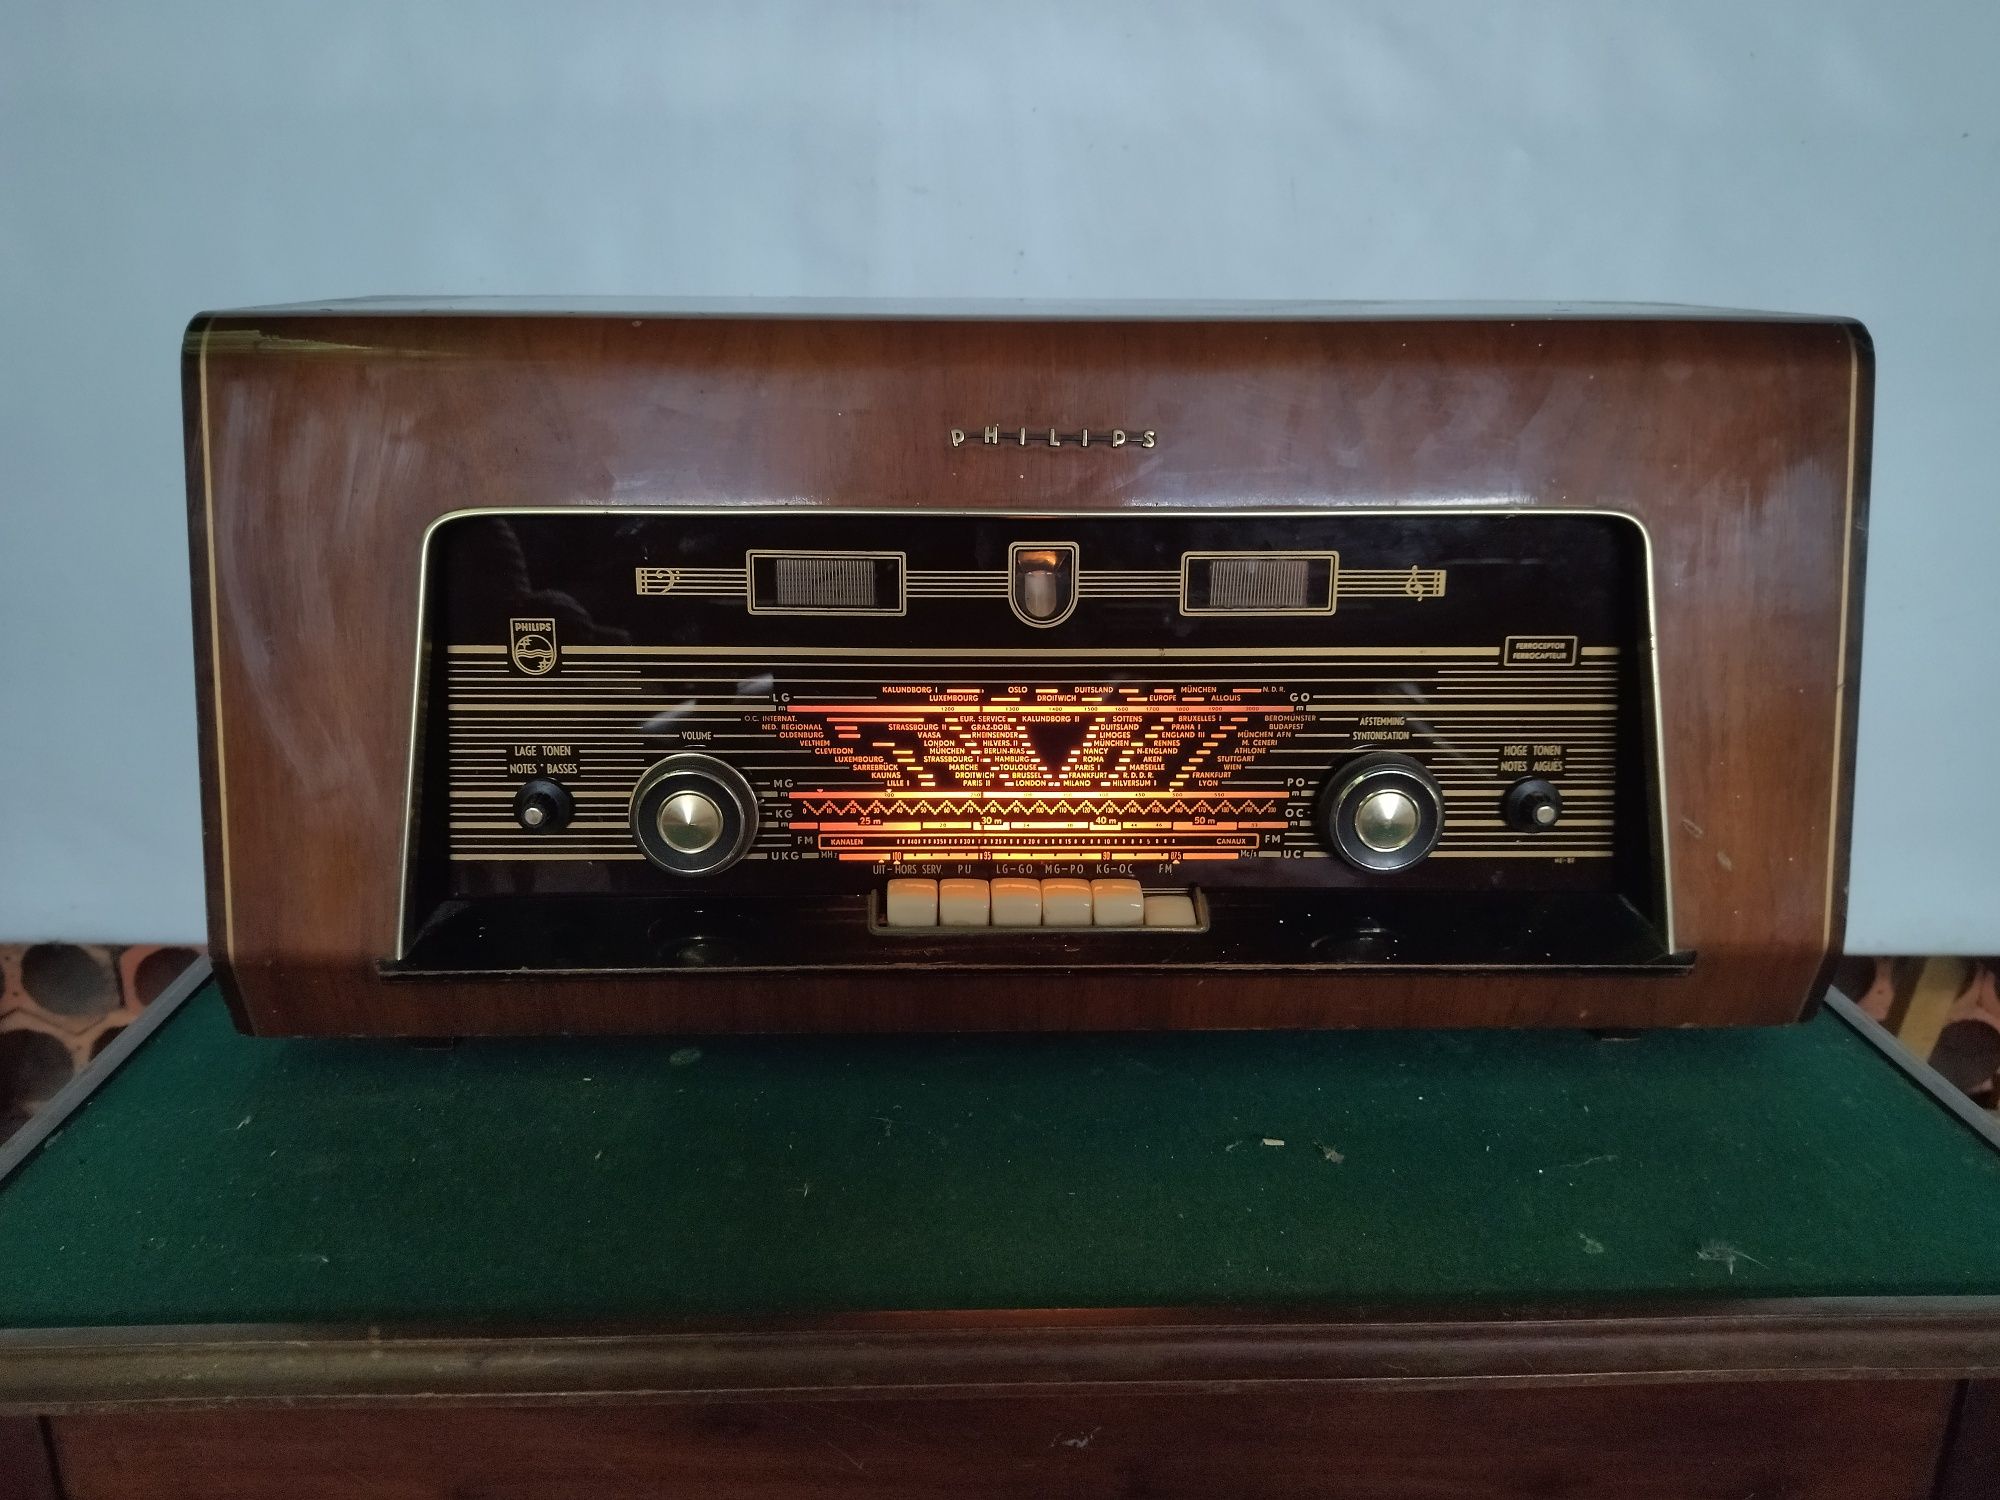 Radio Valvulas Philips b5x74a